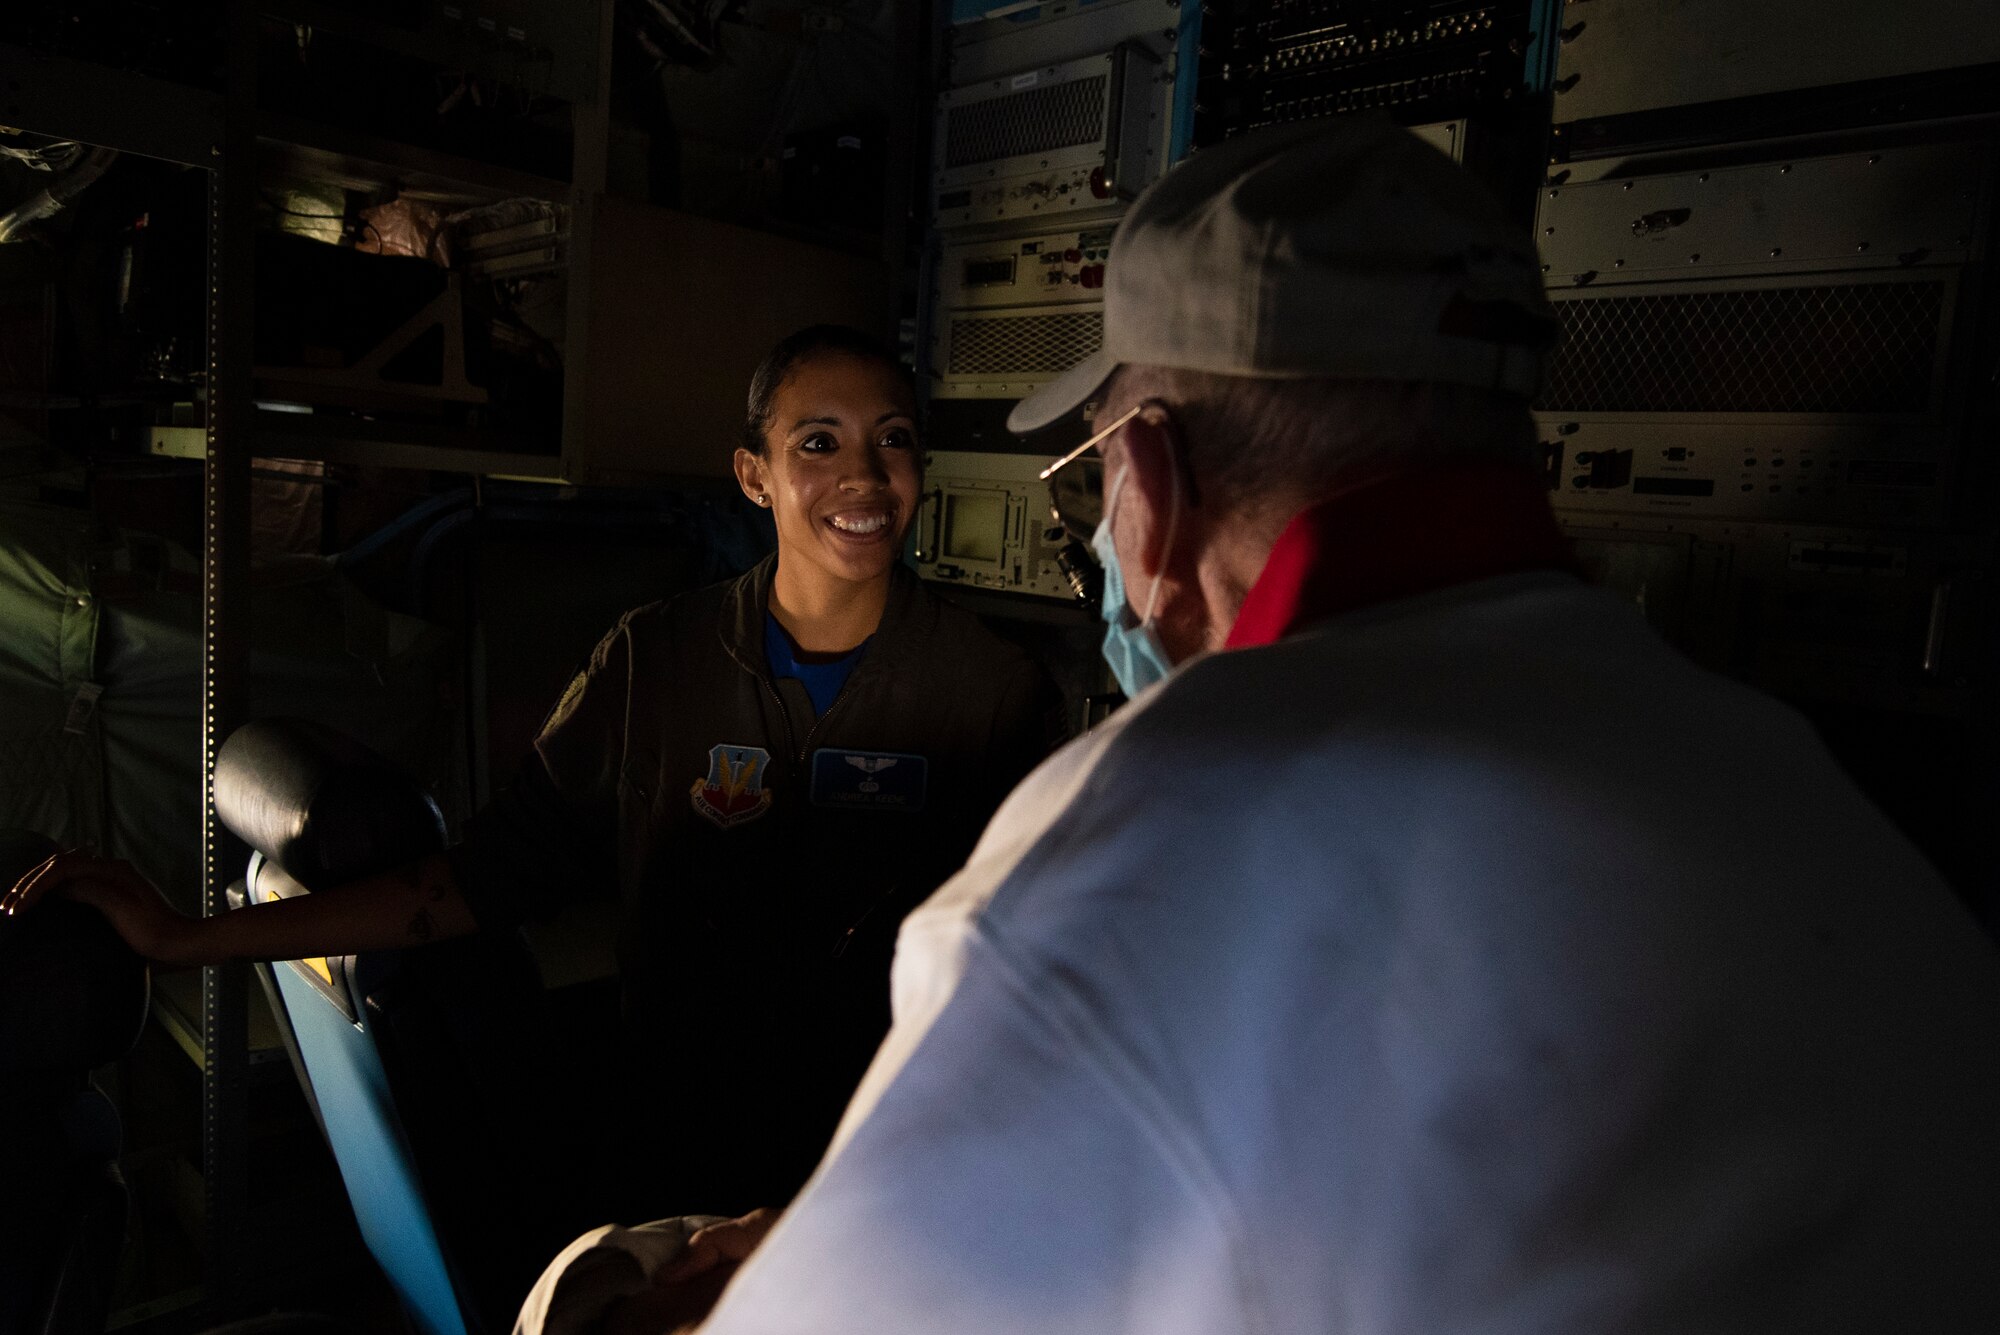 An active duty member talks to a retiree inside an aircraft